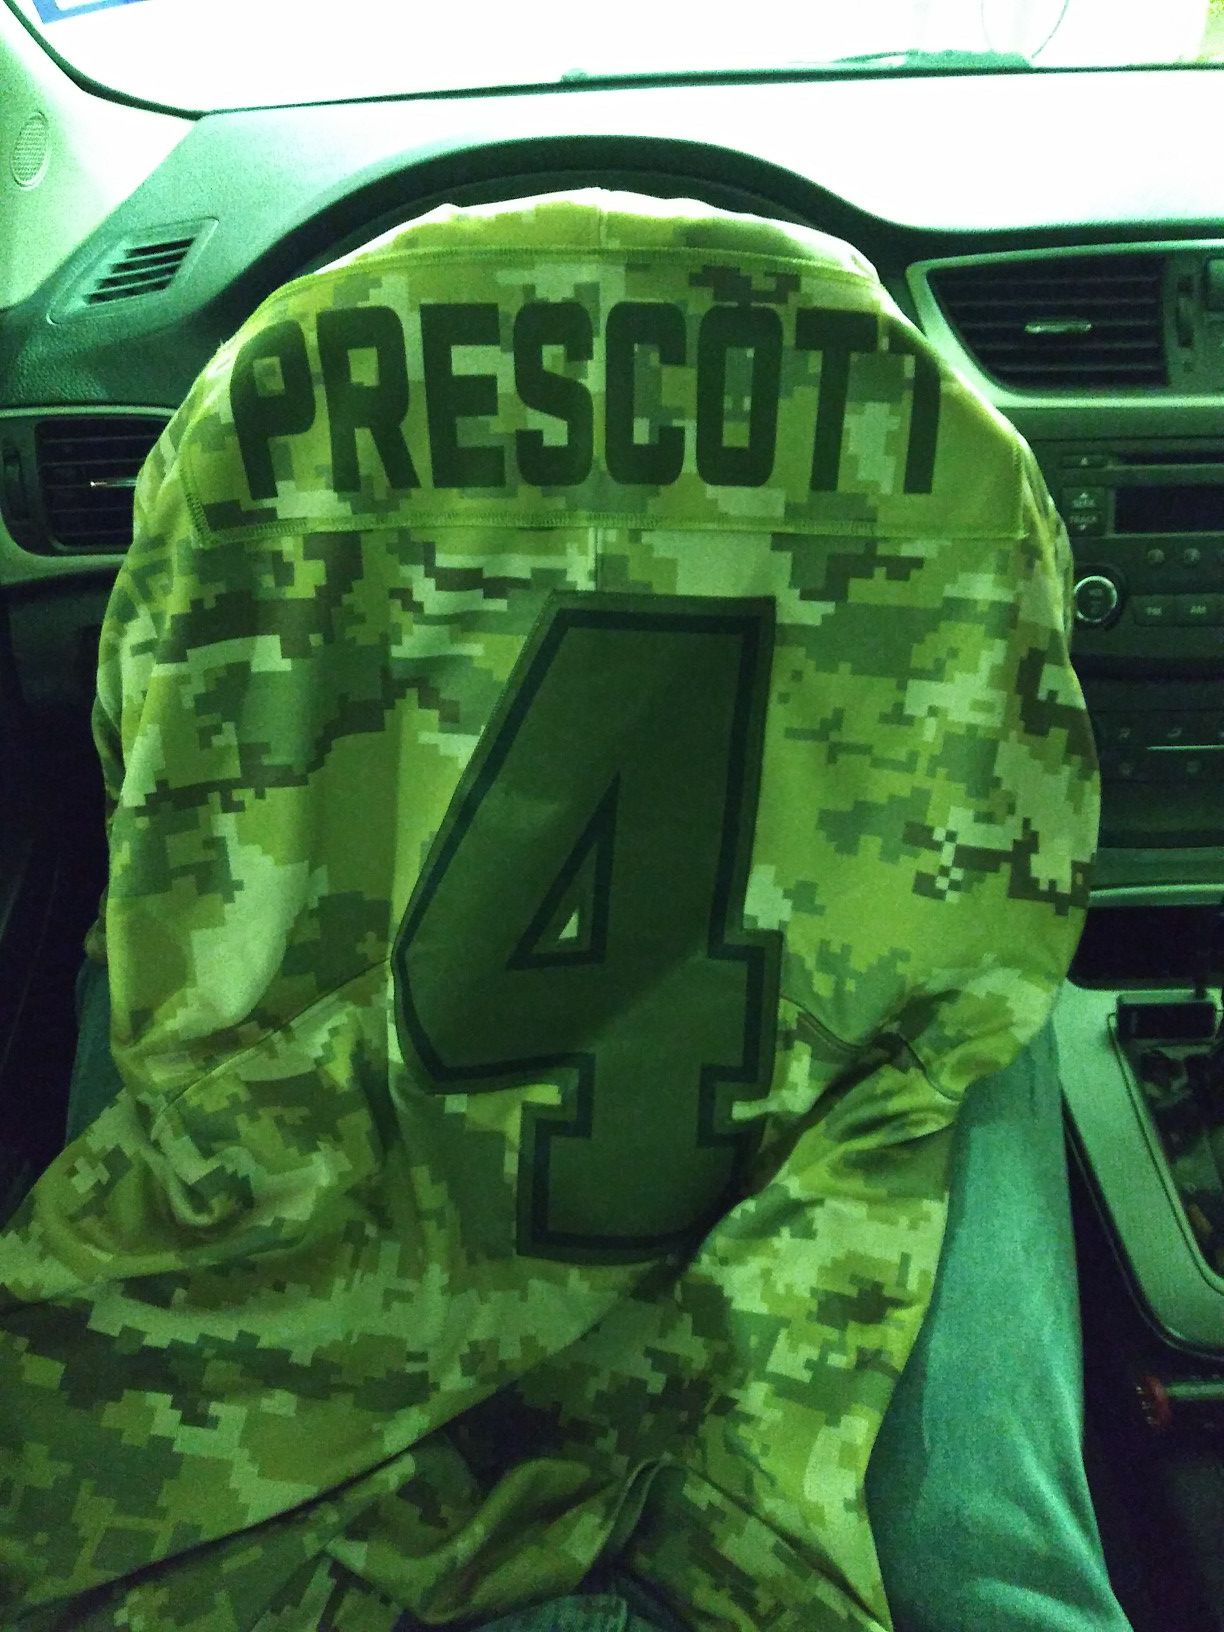 Dak prescott army jersey